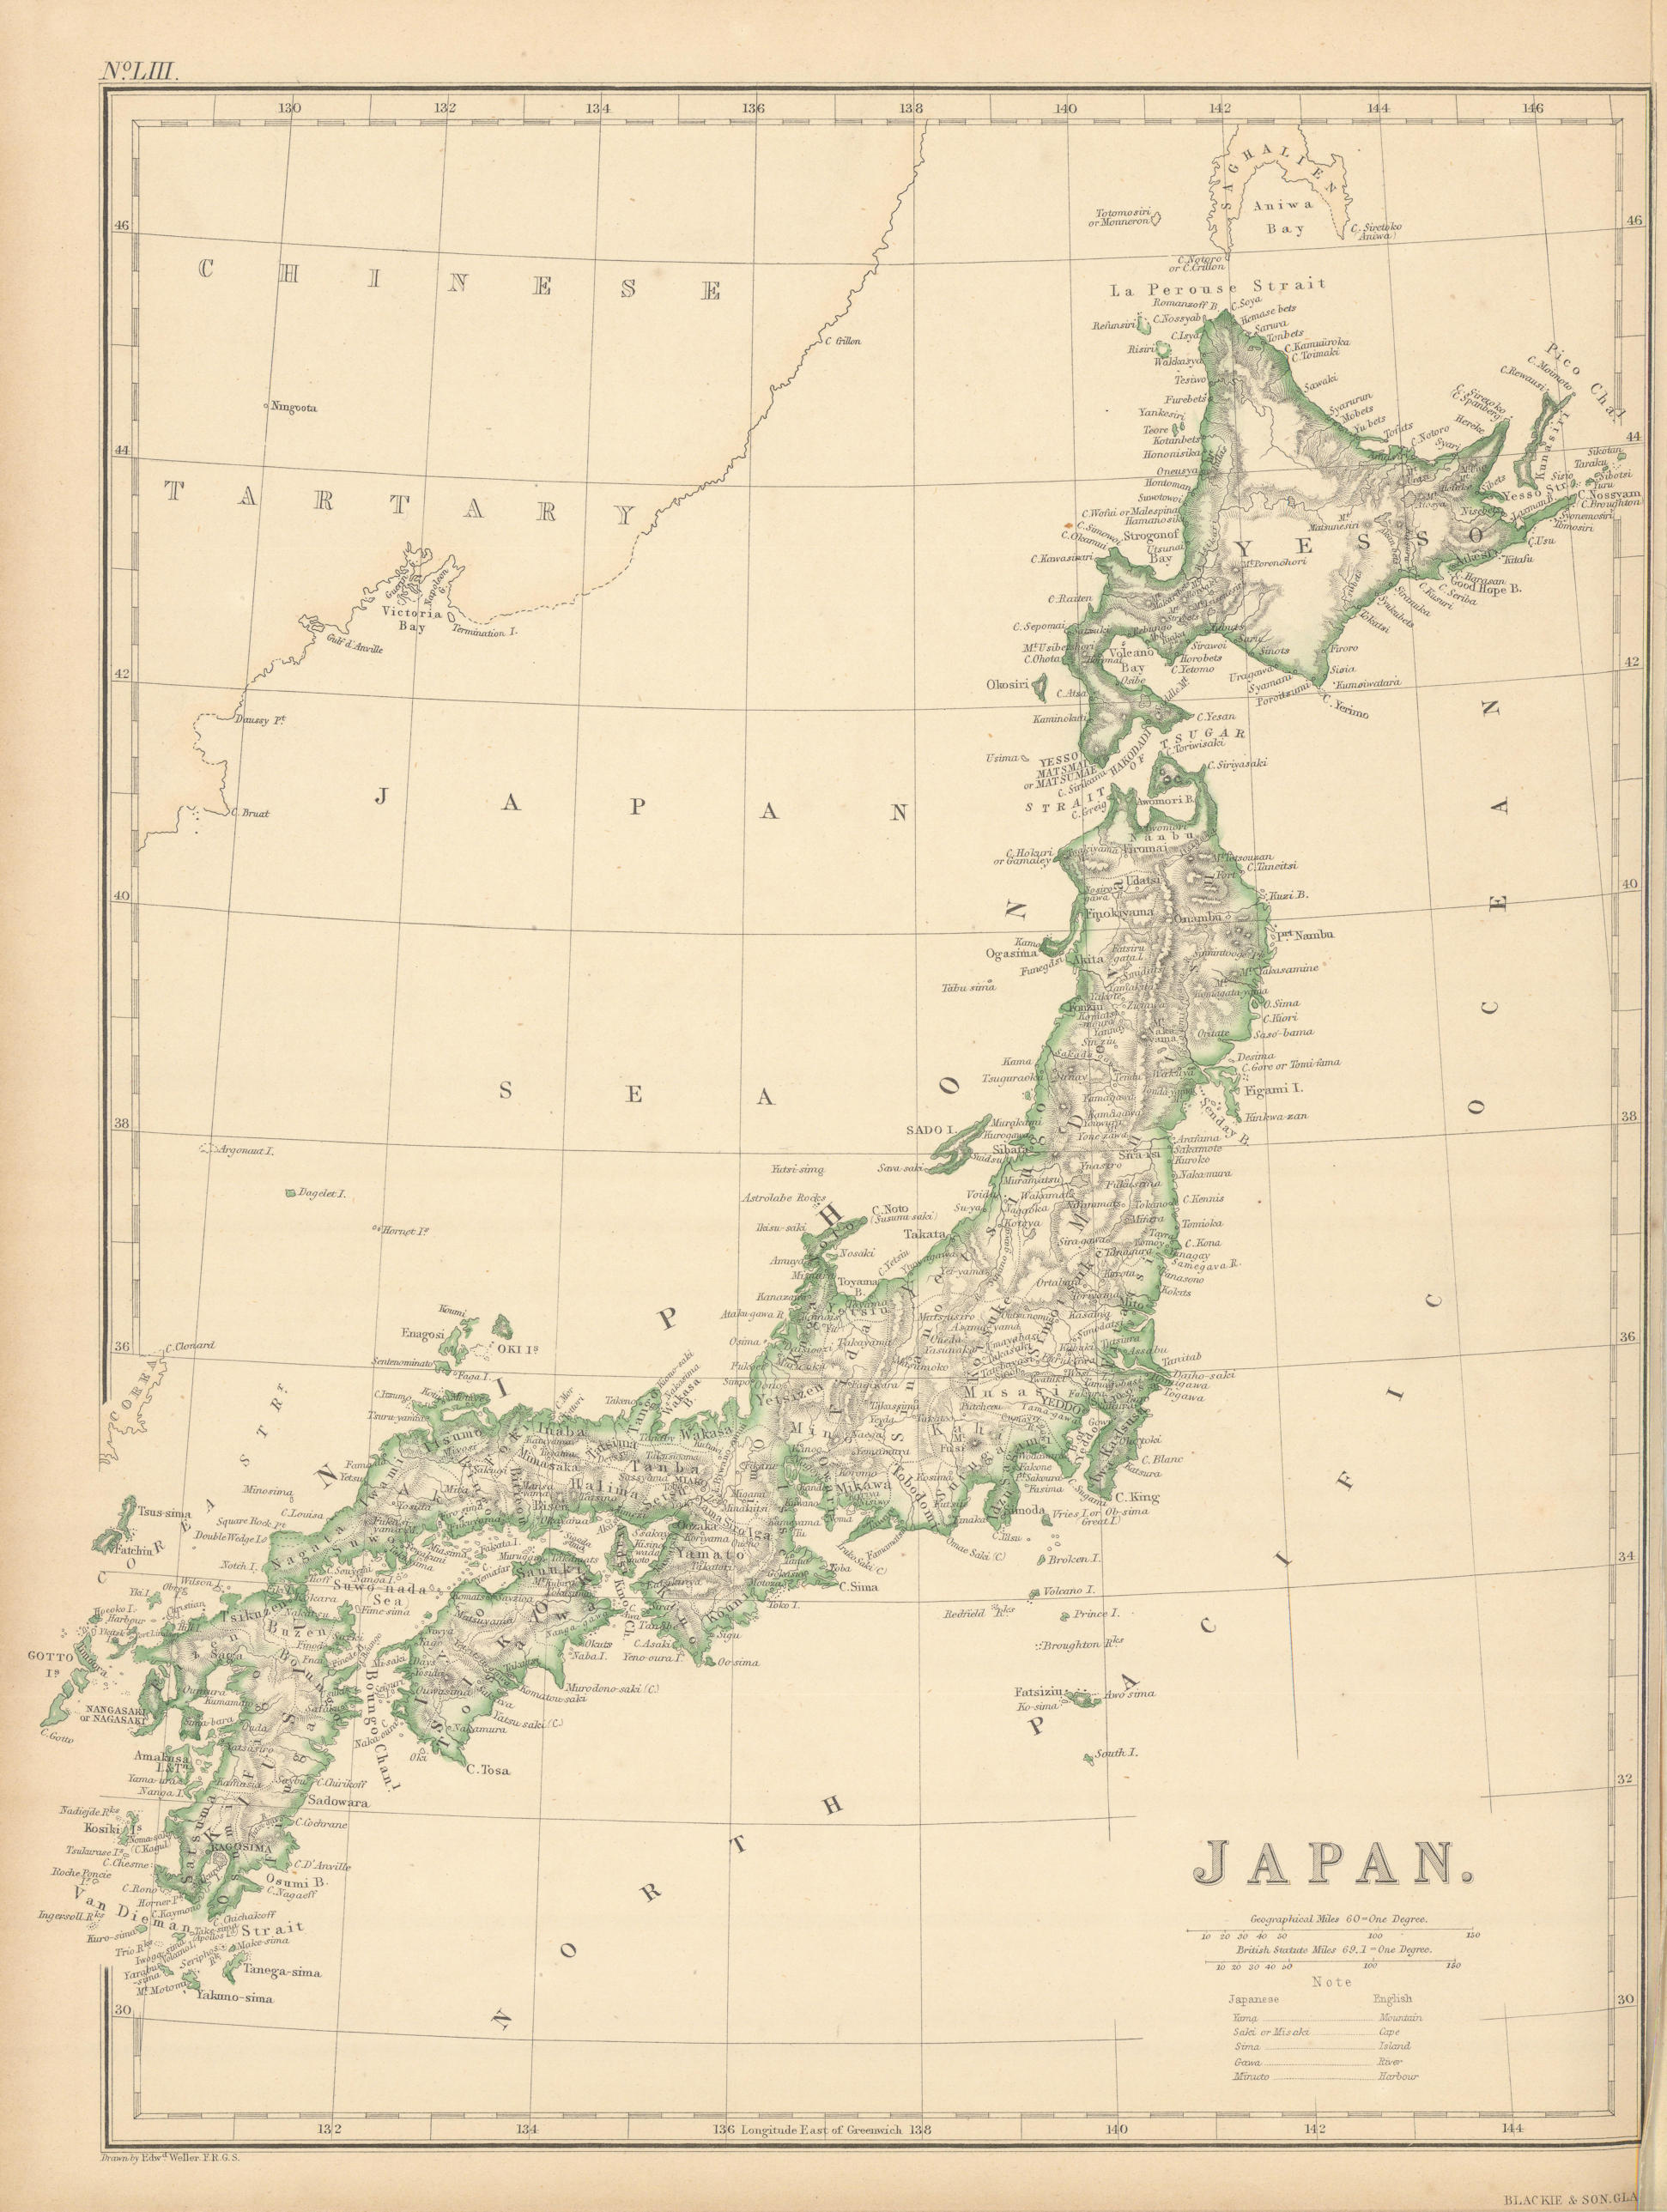 Associate Product Japan by Edward Weller 1859 old antique vintage map plan chart